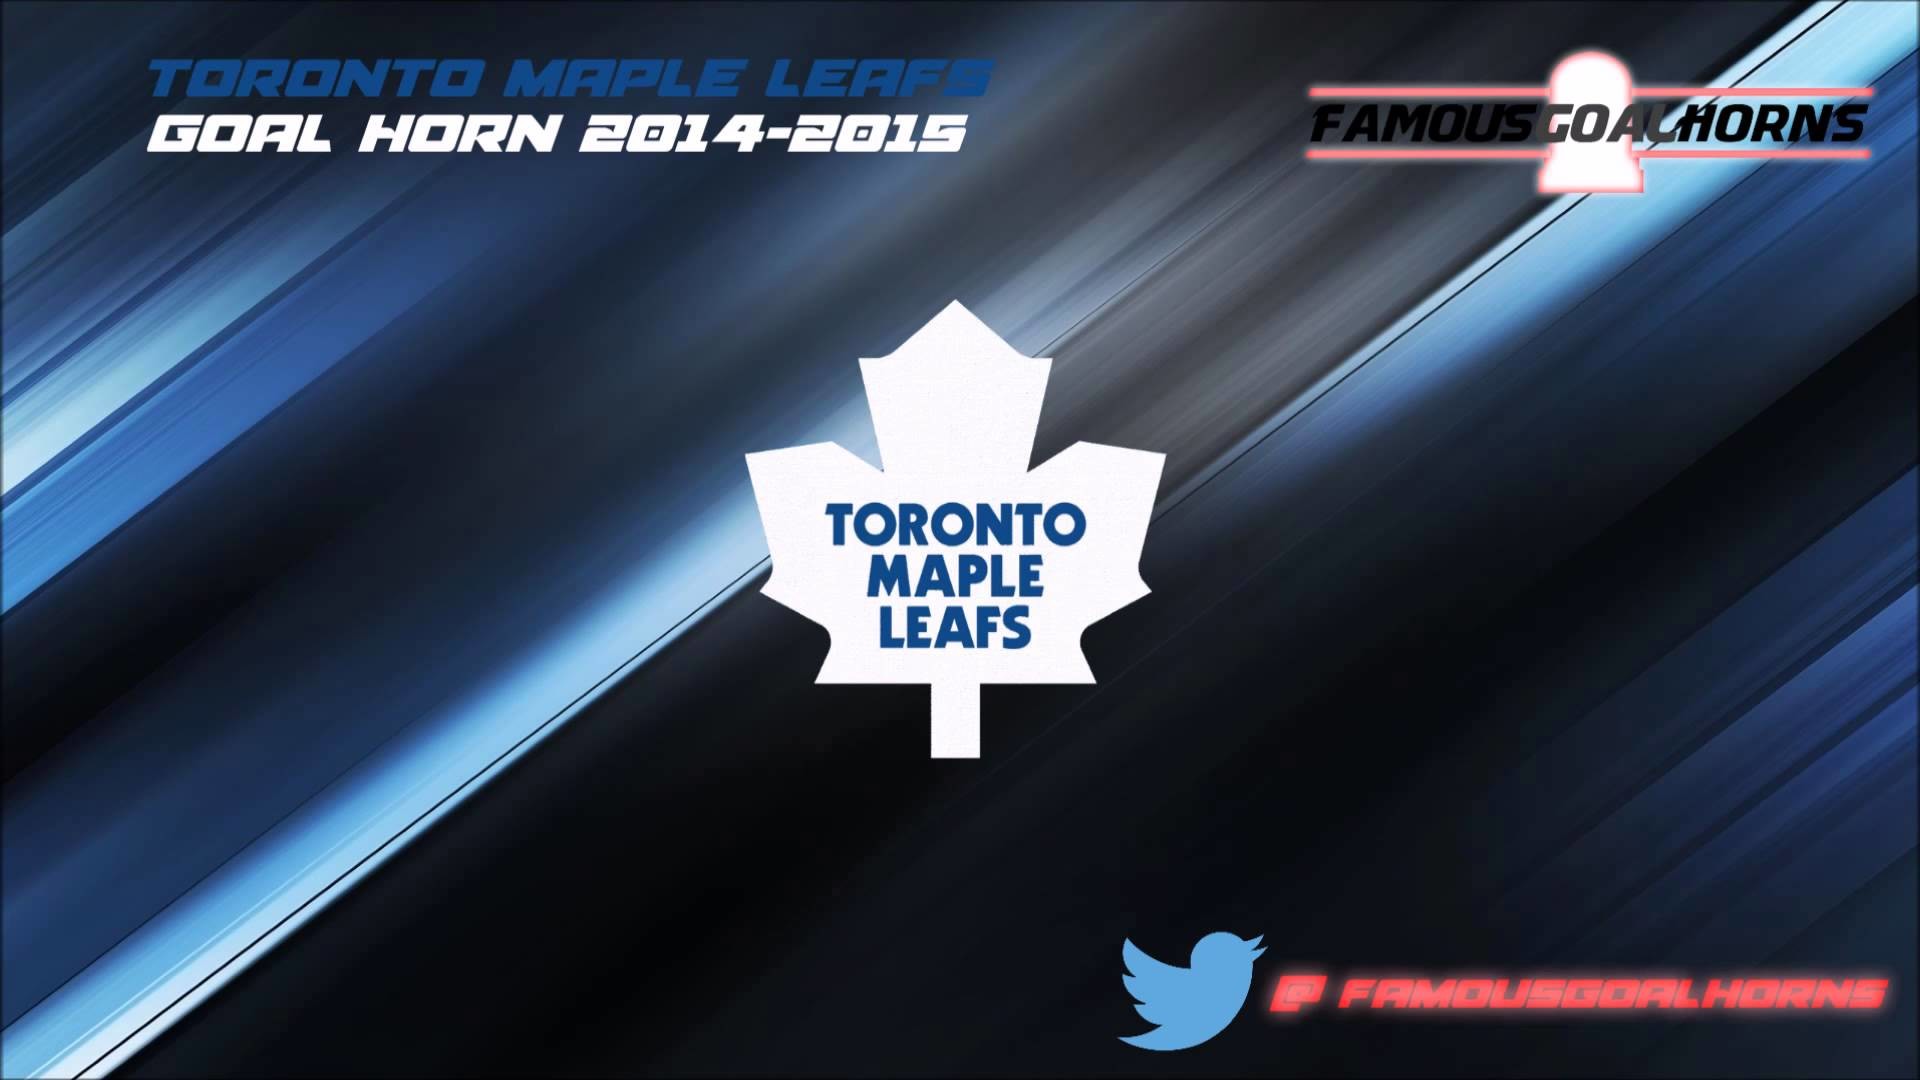 1920x1080 Toronto Maple Leafs Goal Horn 2014-2015